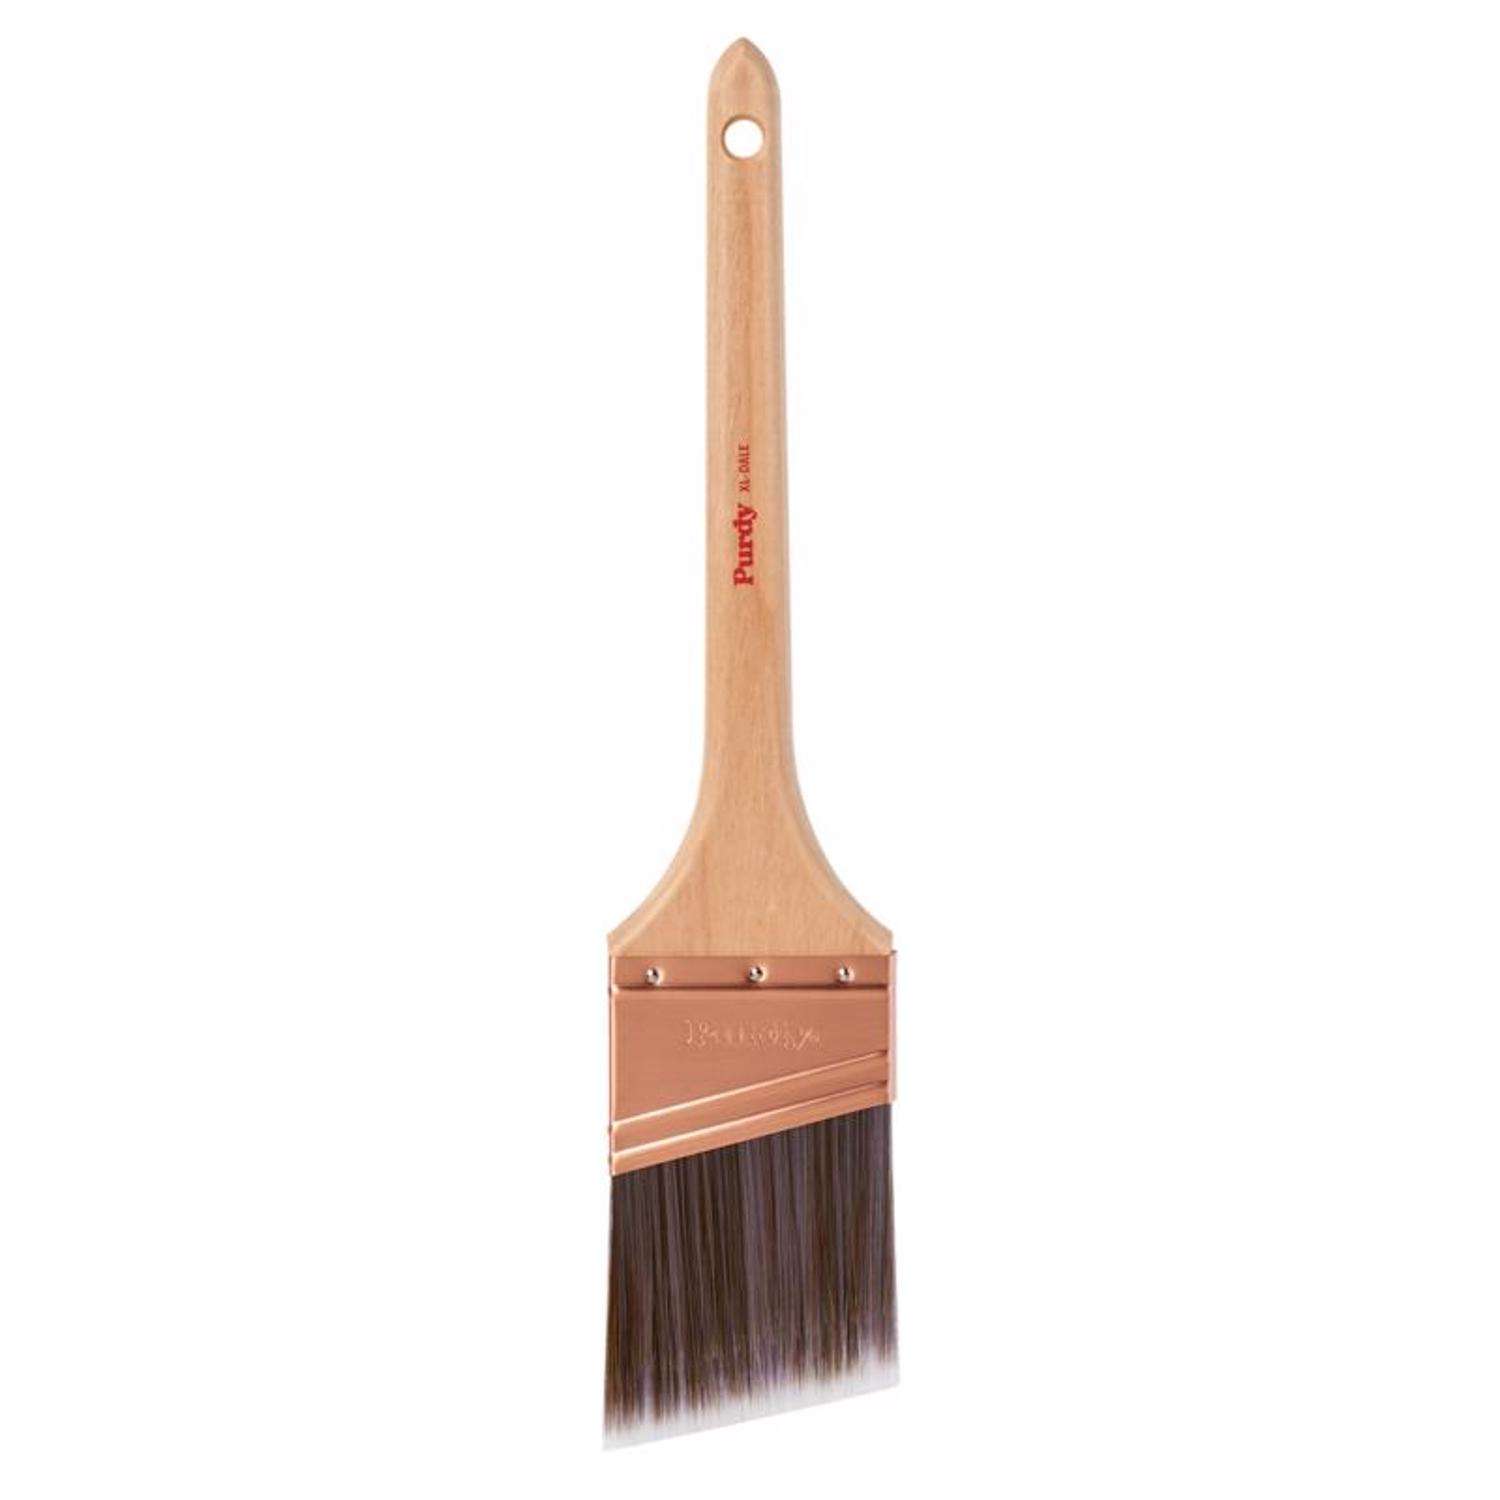 PURDY XL-Dale Angular Sash & Trim Paint Brush, 2.5-In.